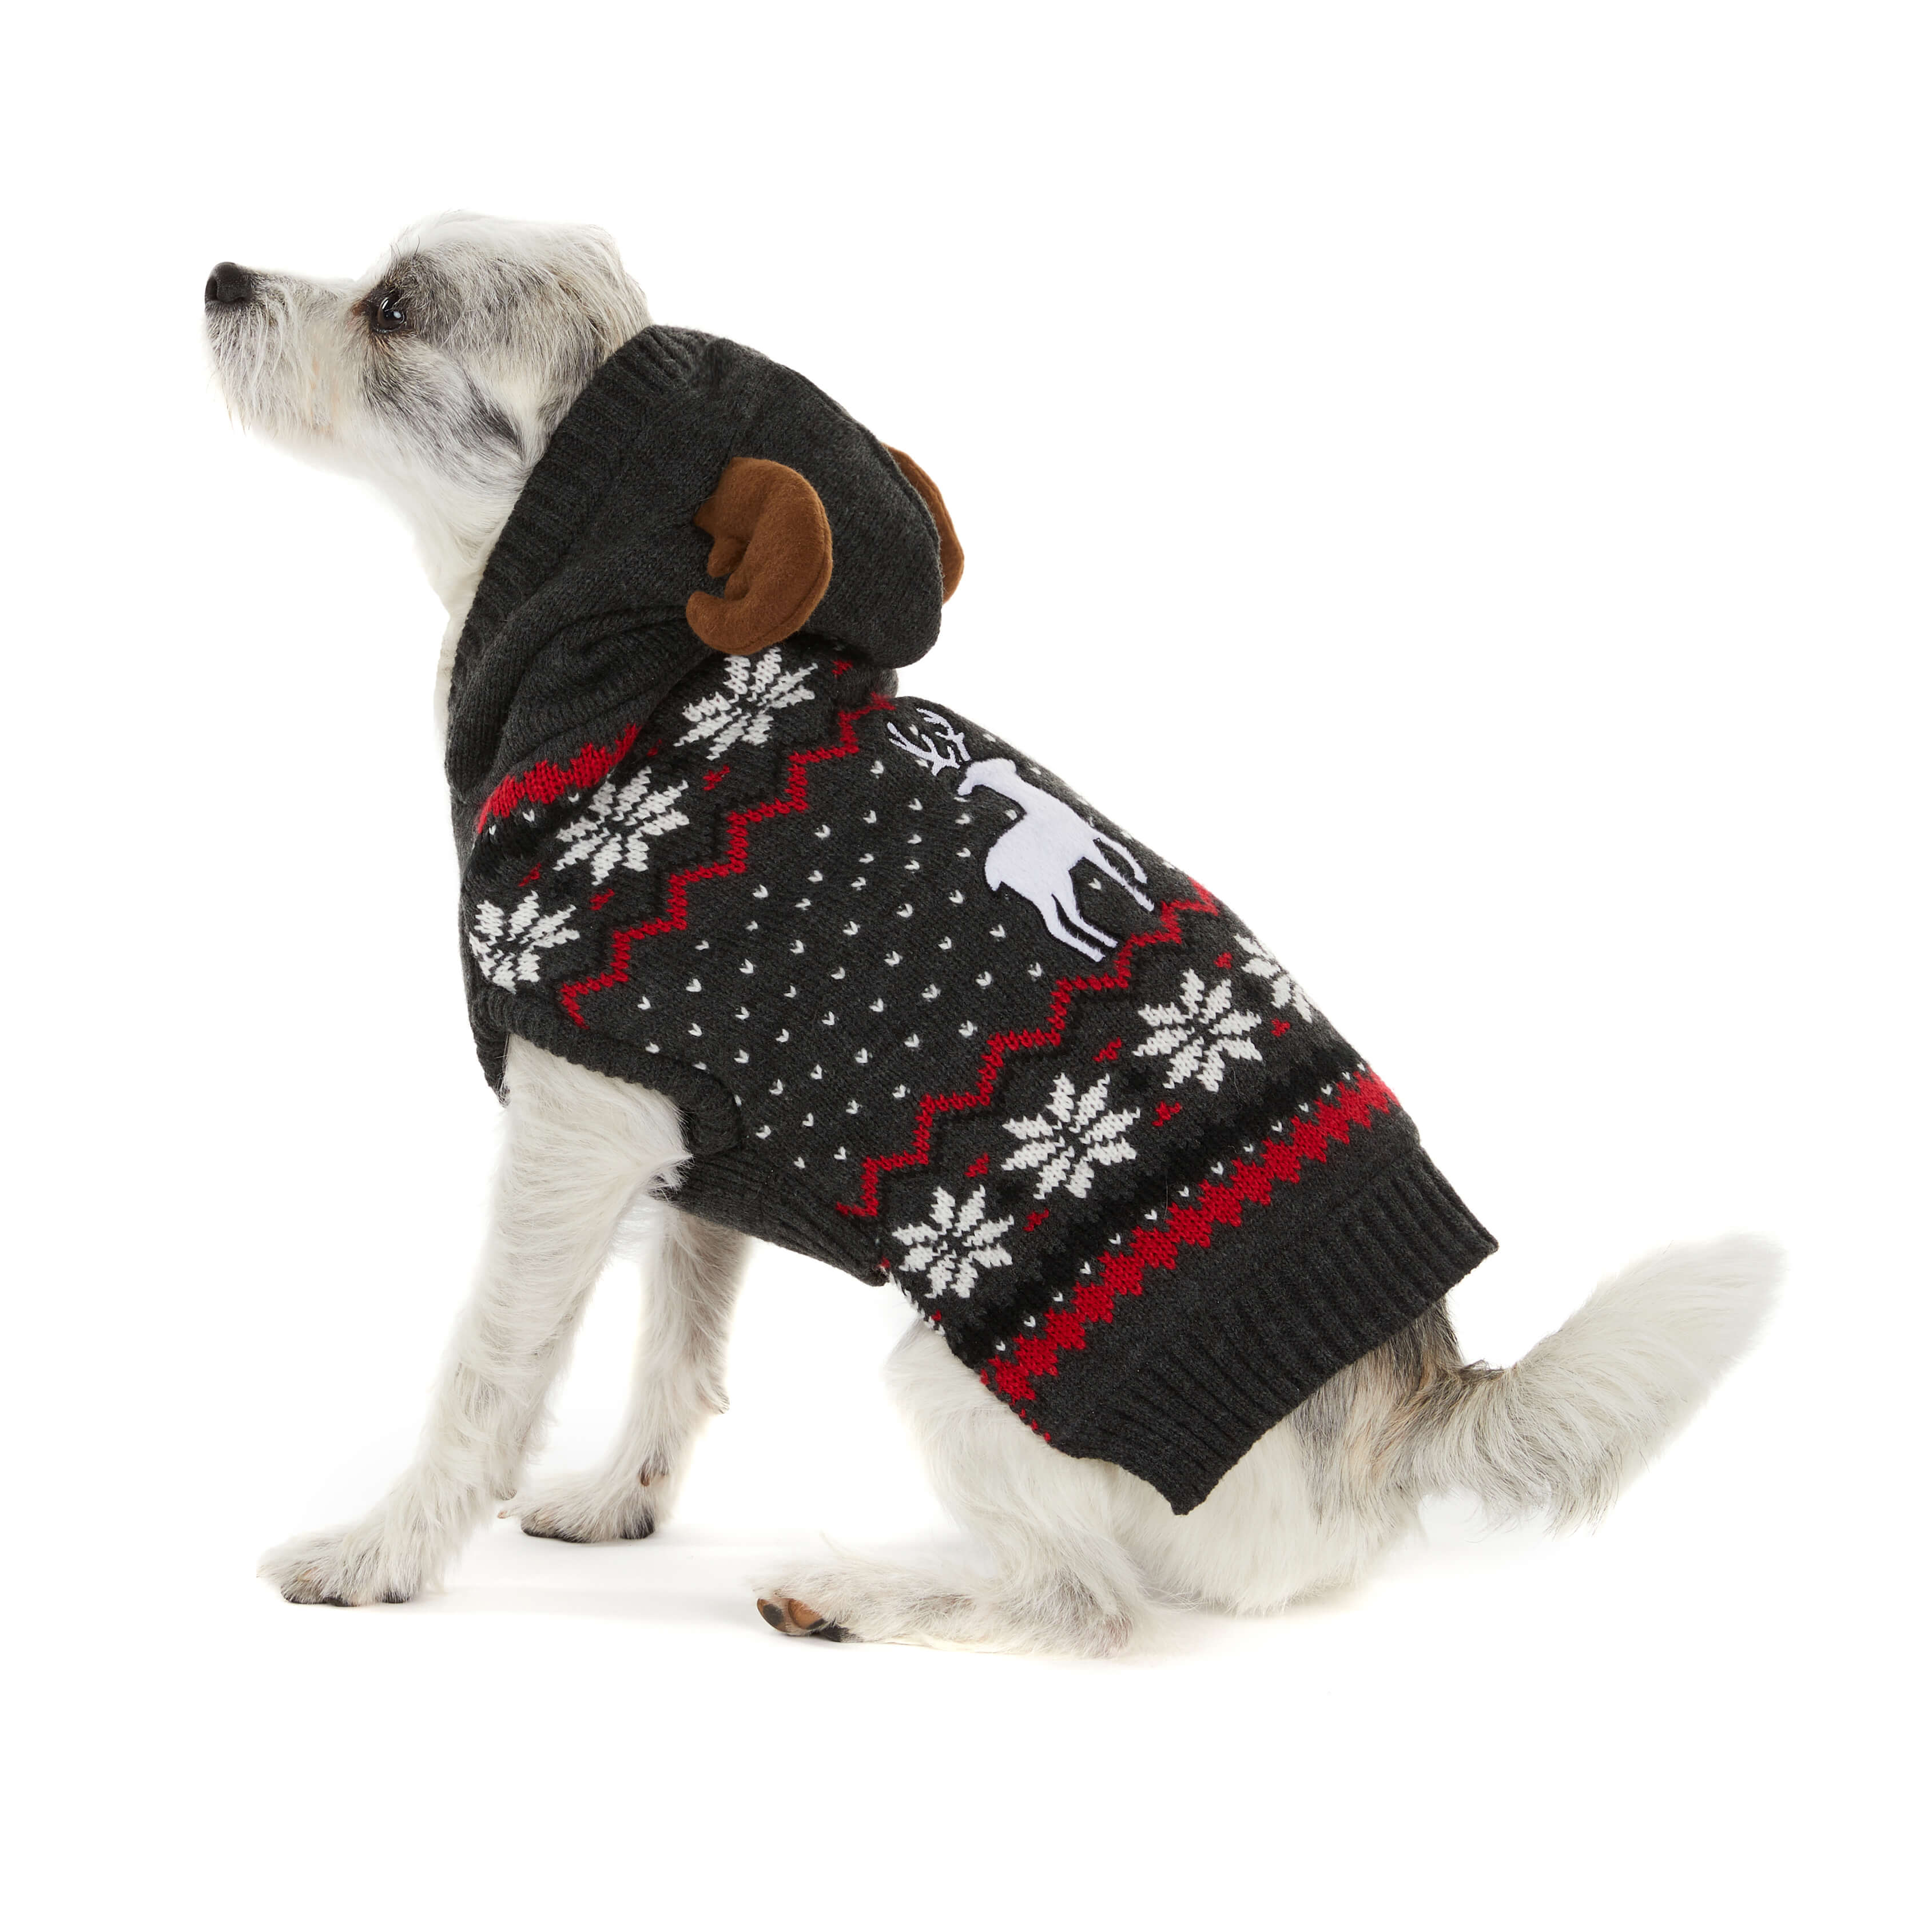 Dog wearing festive antler sweater. Side view